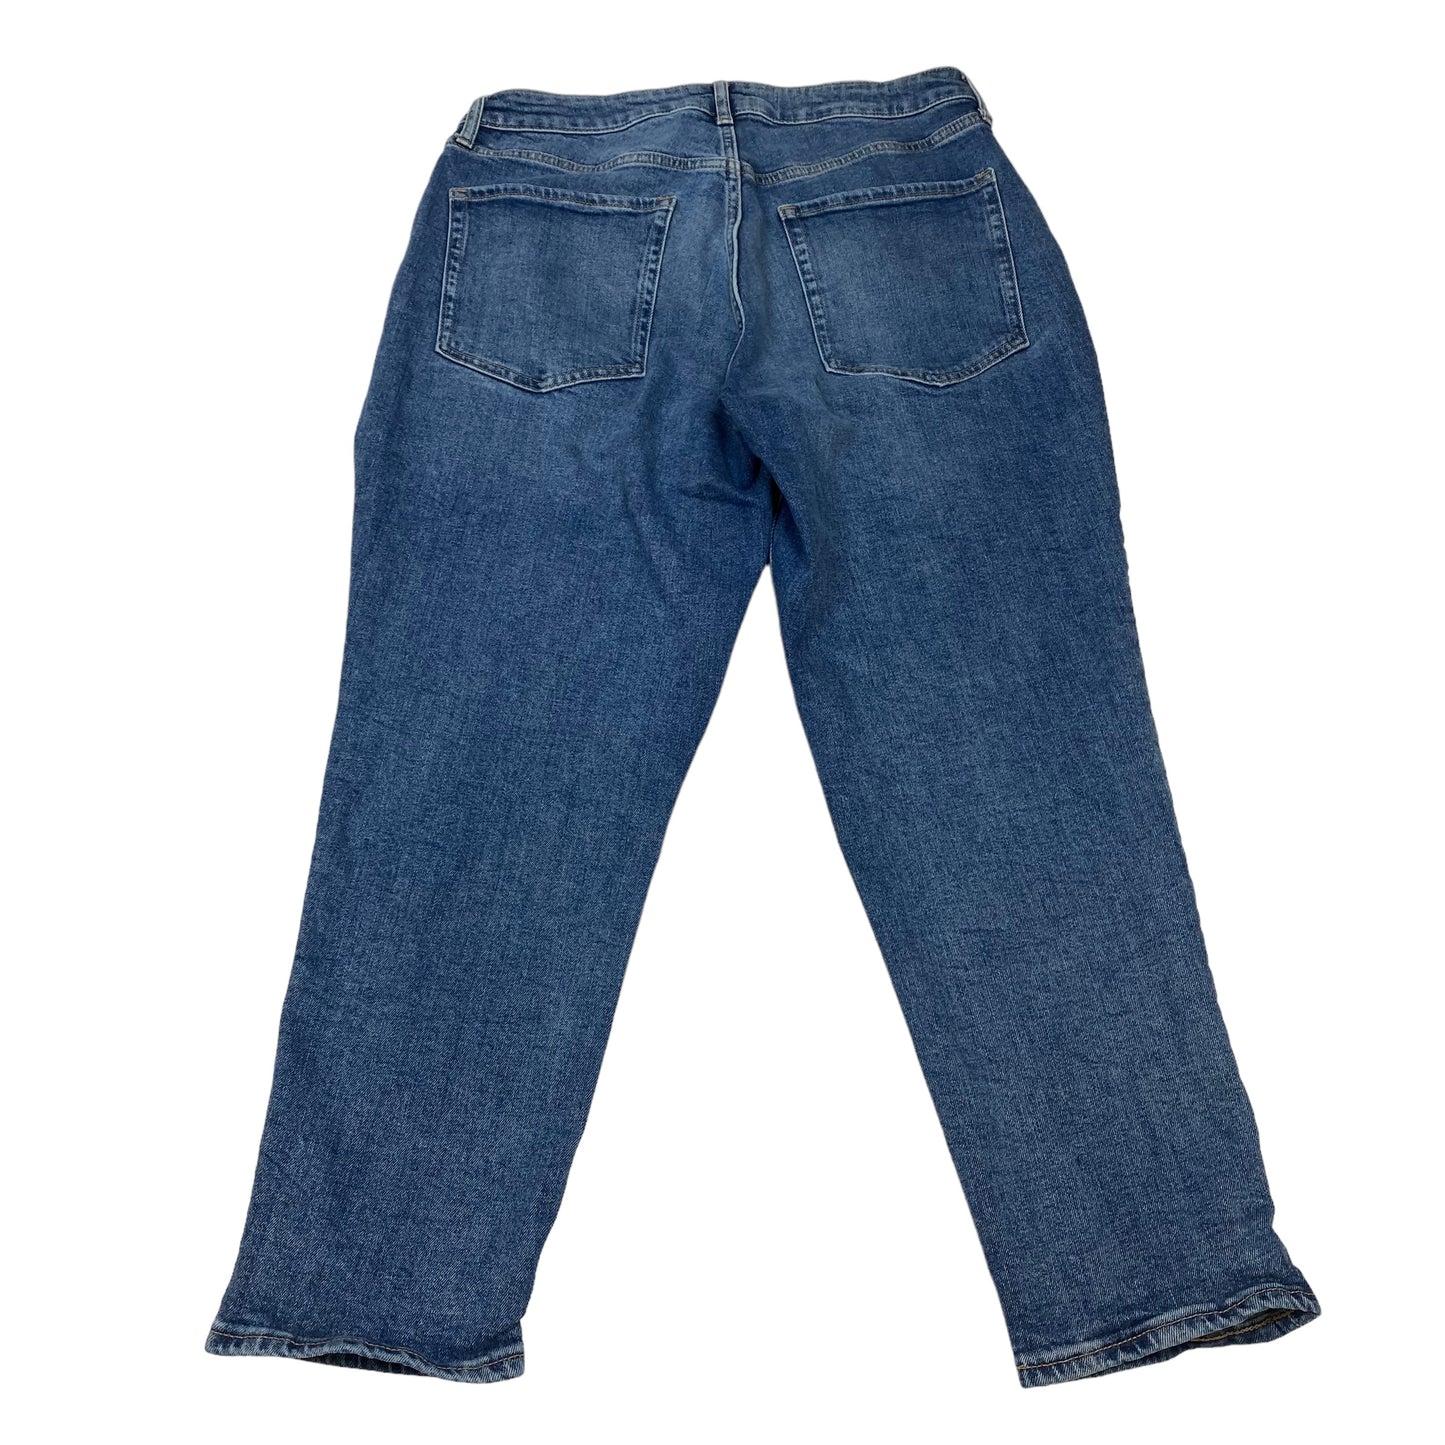 Blue Denim Jeans Straight Old Navy, Size 14